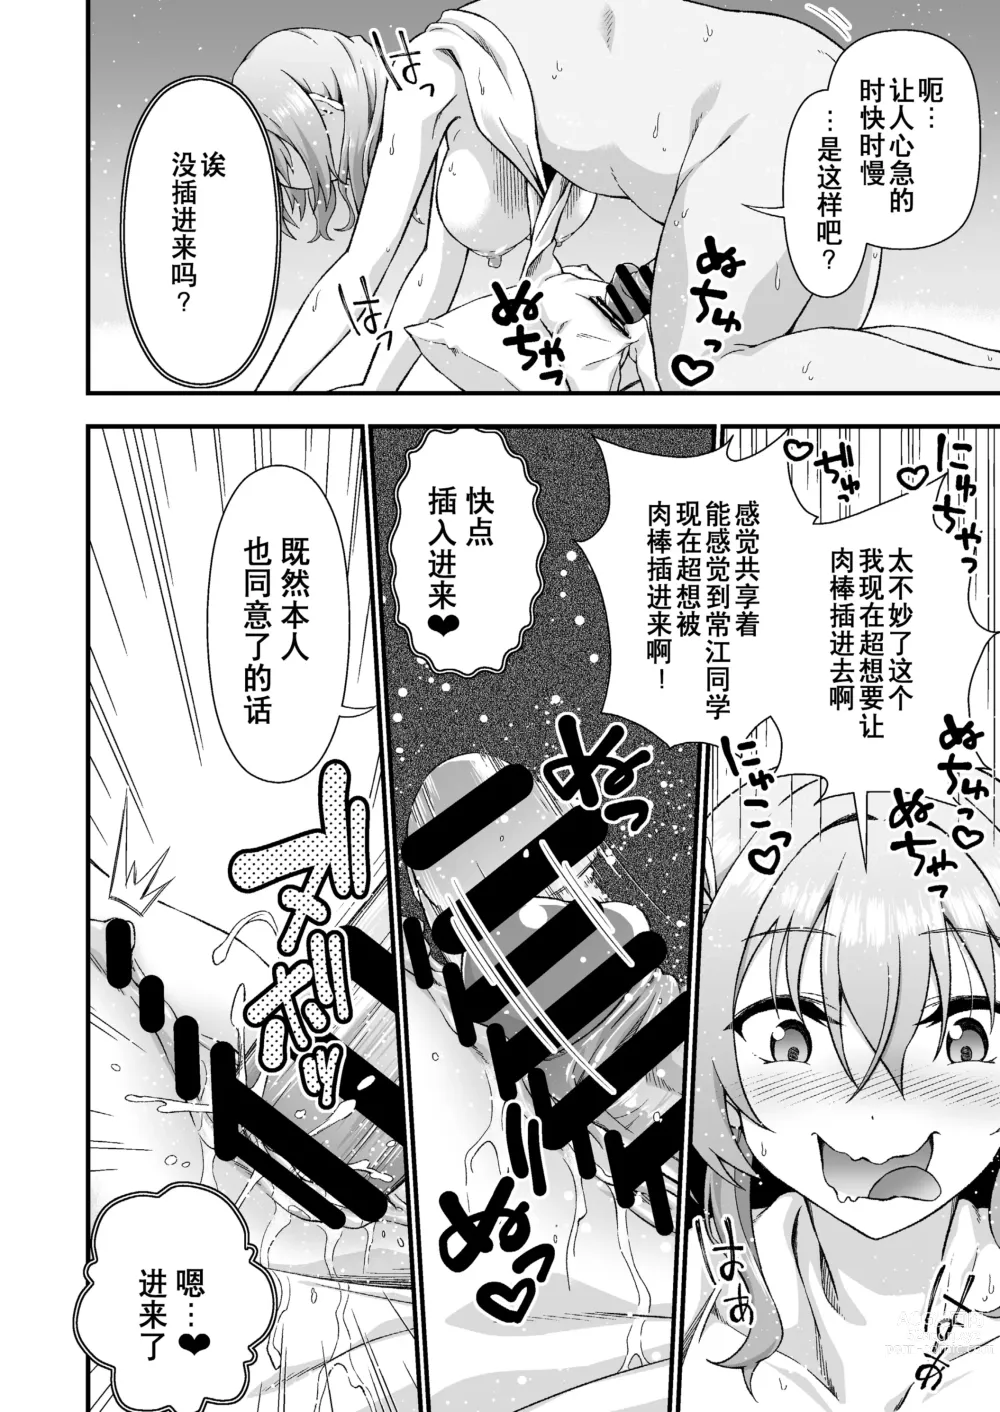 Page 14 of doujinshi Kawa-ka Daiko o kawari